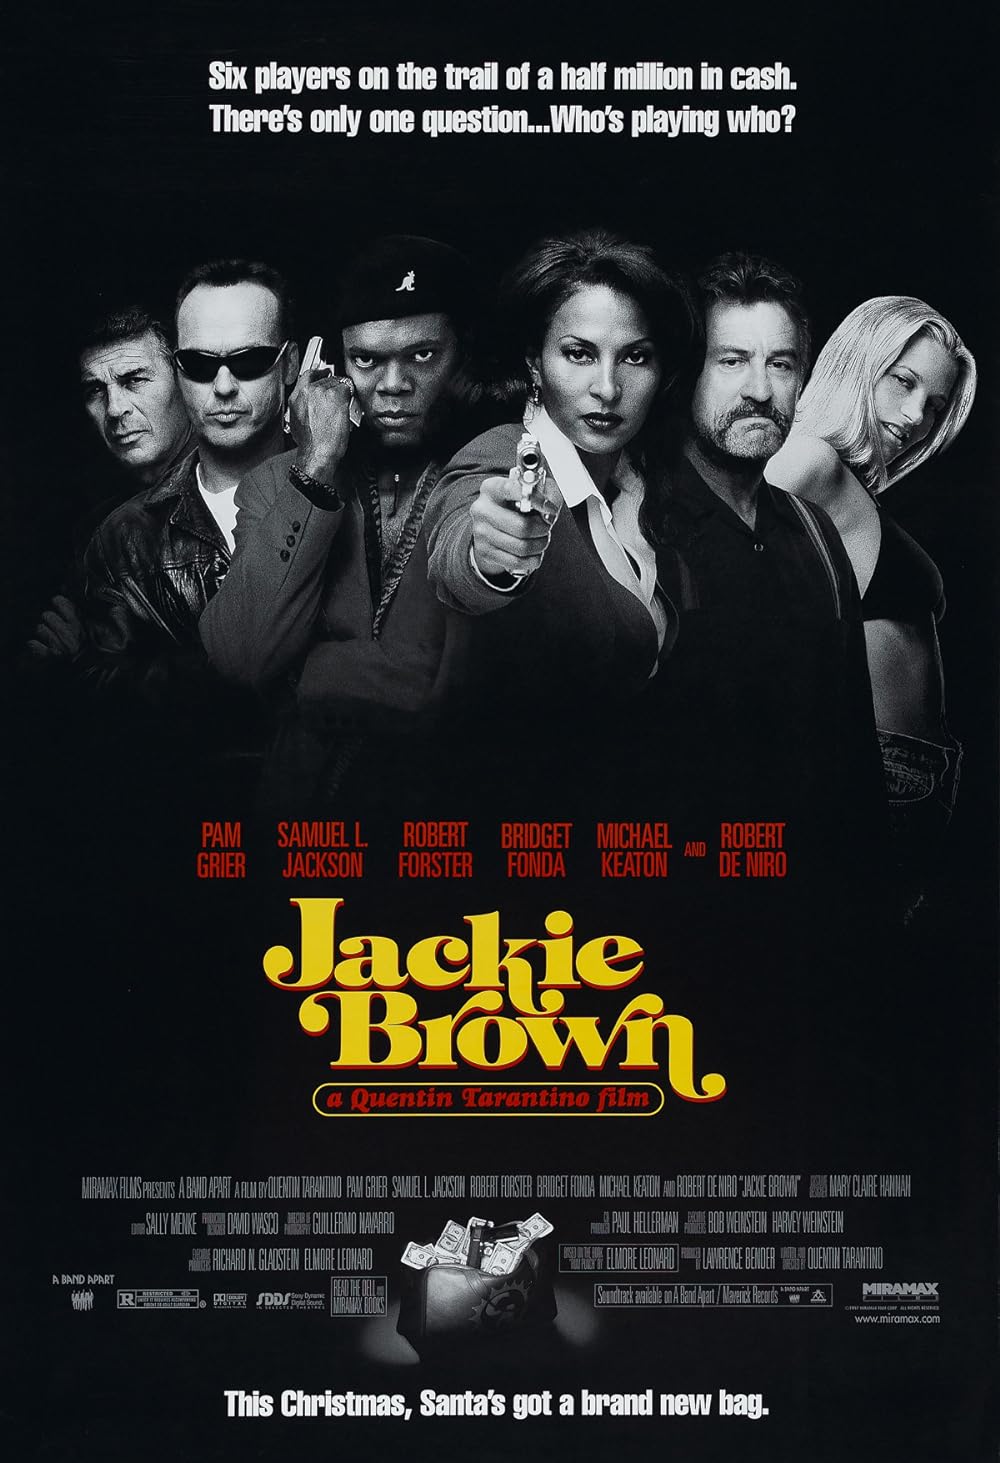 Jackie Brown (1997) 930Kbps 23.976Fps 48Khz BluRay DTS-HD MA 2.0Ch Turkish Audio TAC